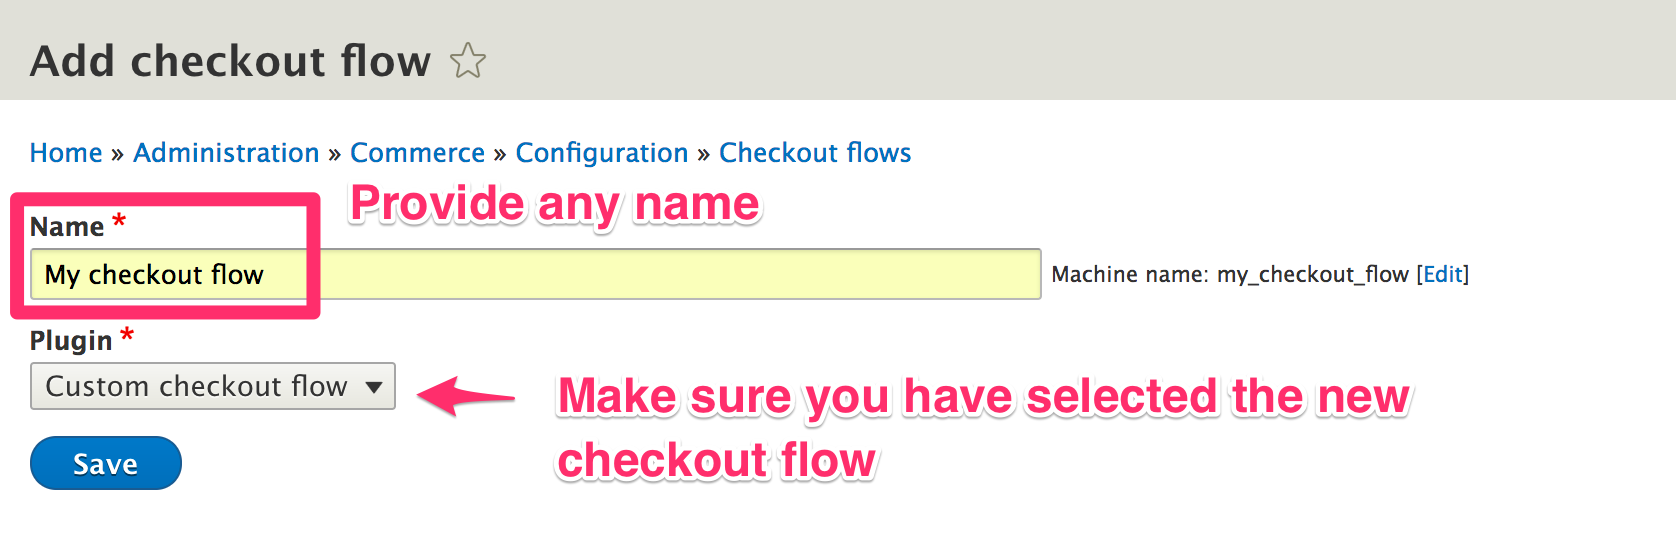 Custom checkout flow 1